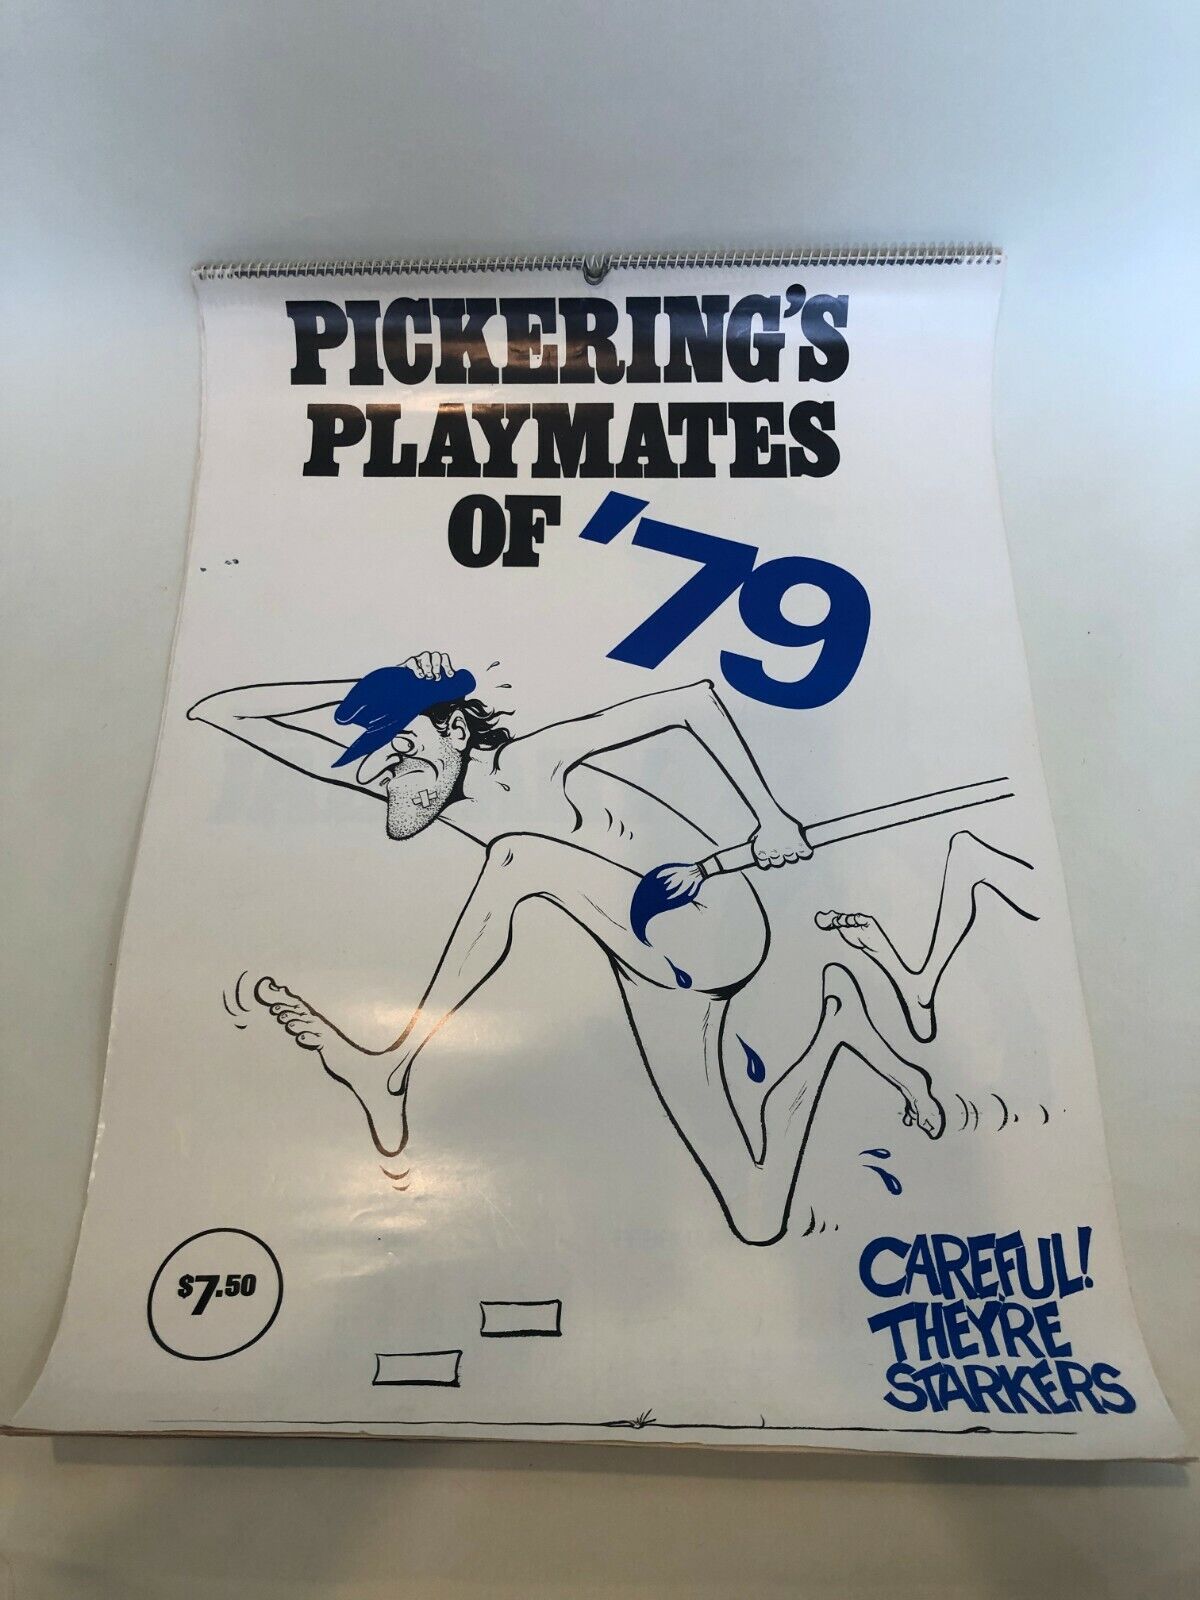  Vintage Pickering's Playmates of '79 Calendar